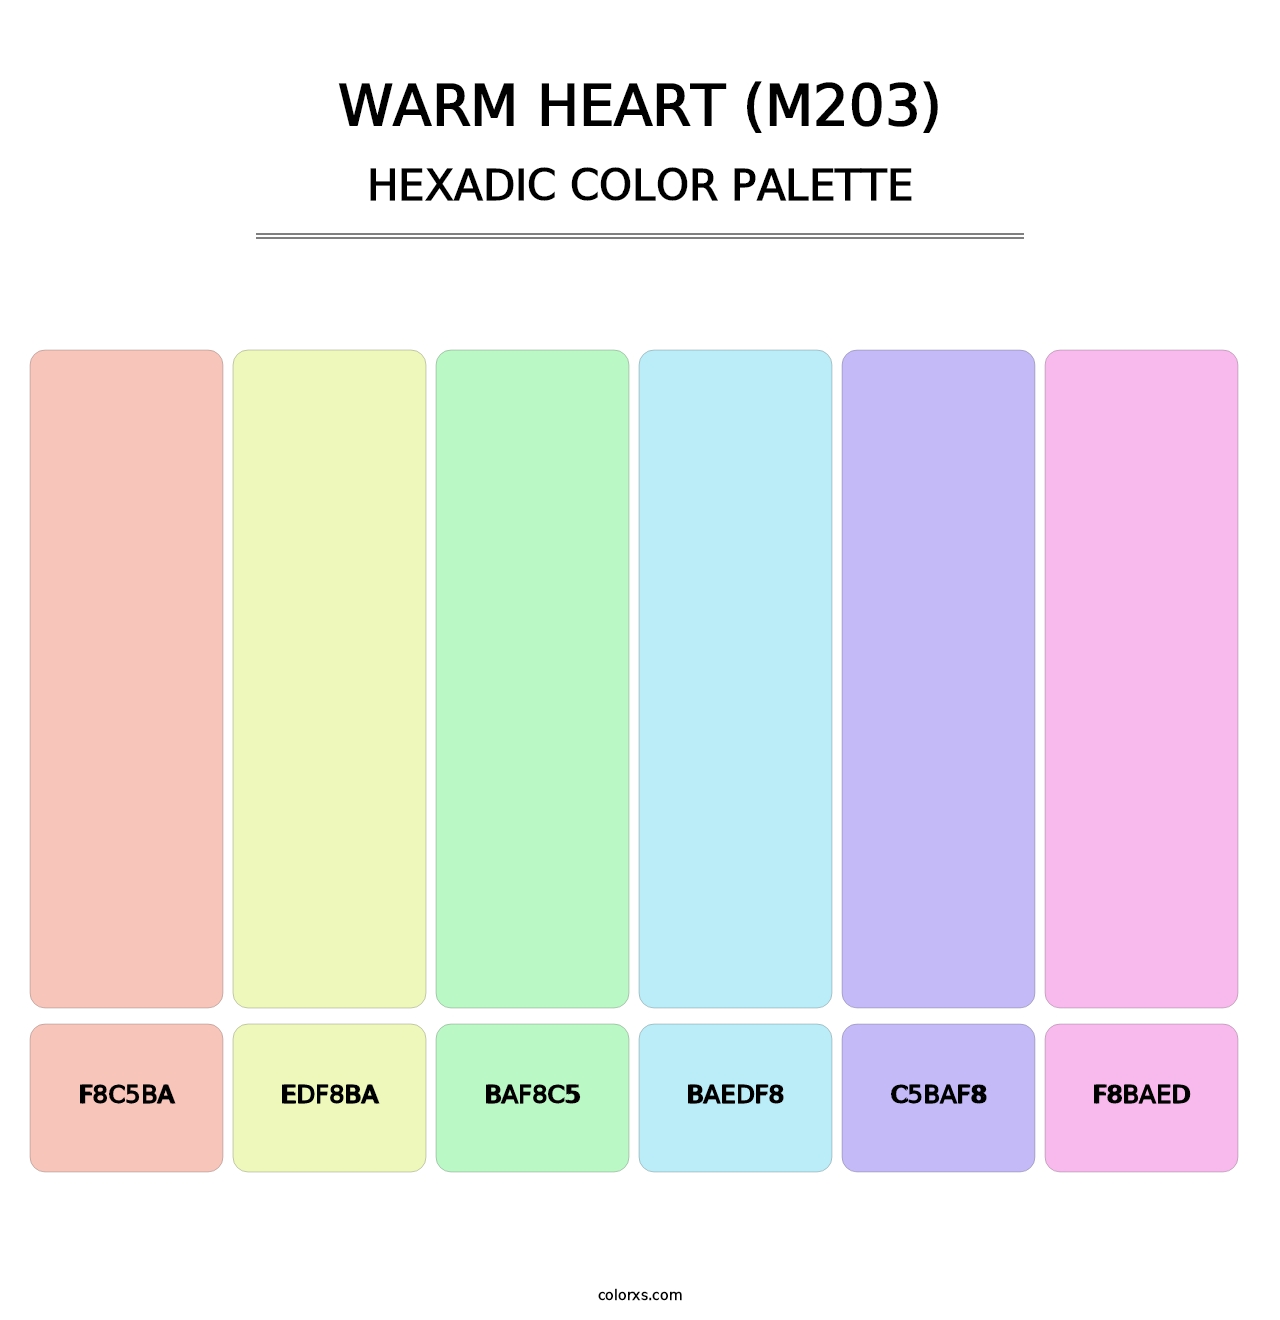 Warm Heart (M203) - Hexadic Color Palette